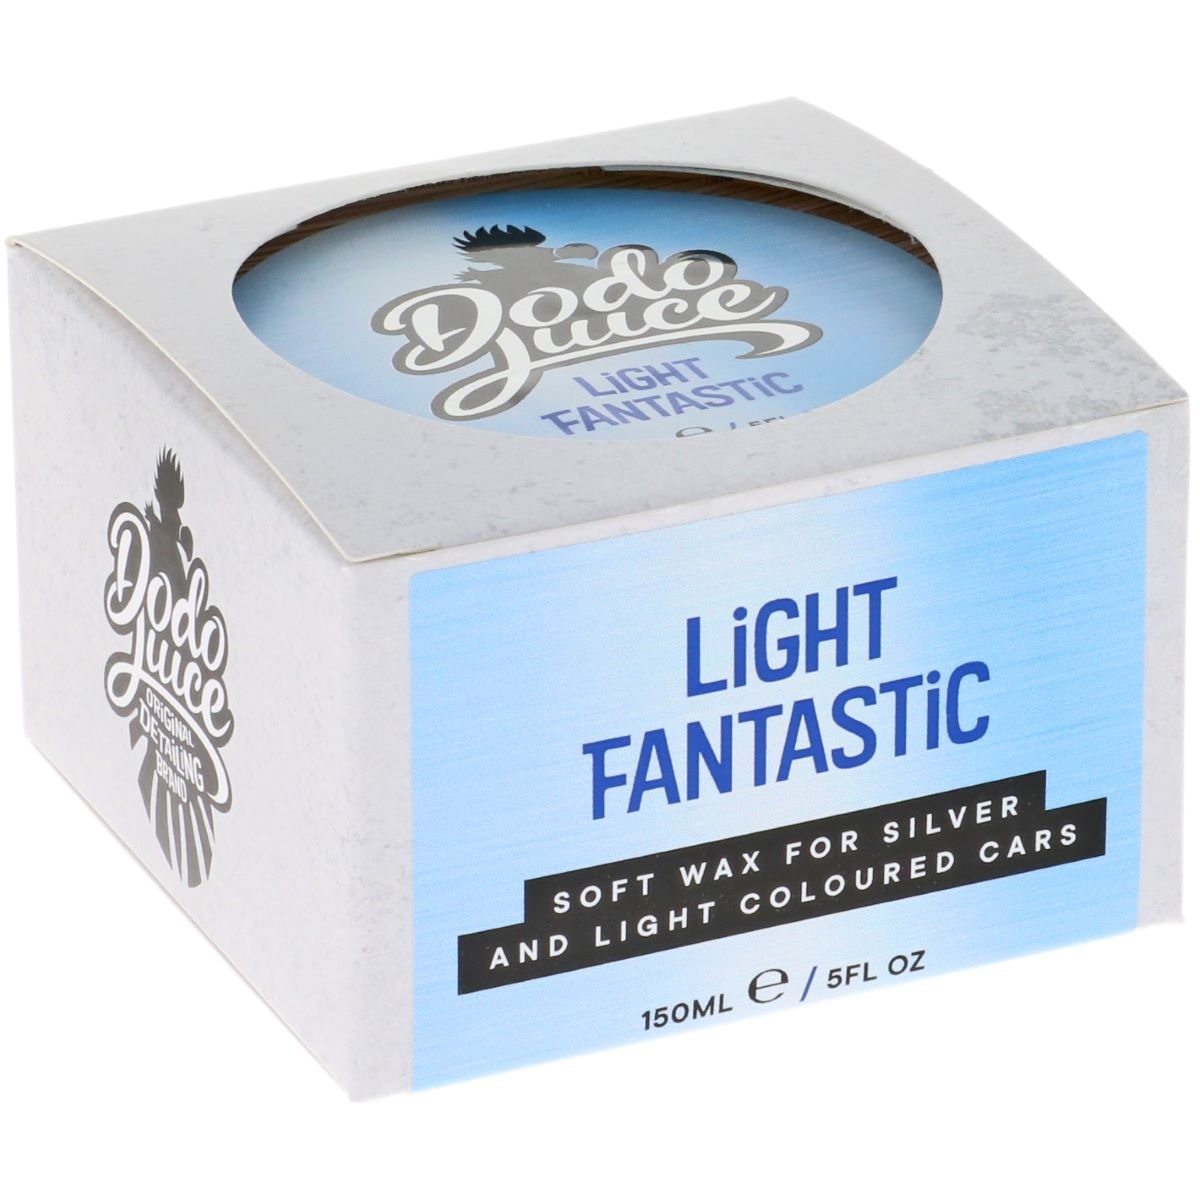 Light Fantastic soft wax for light coloured cars - 150ml